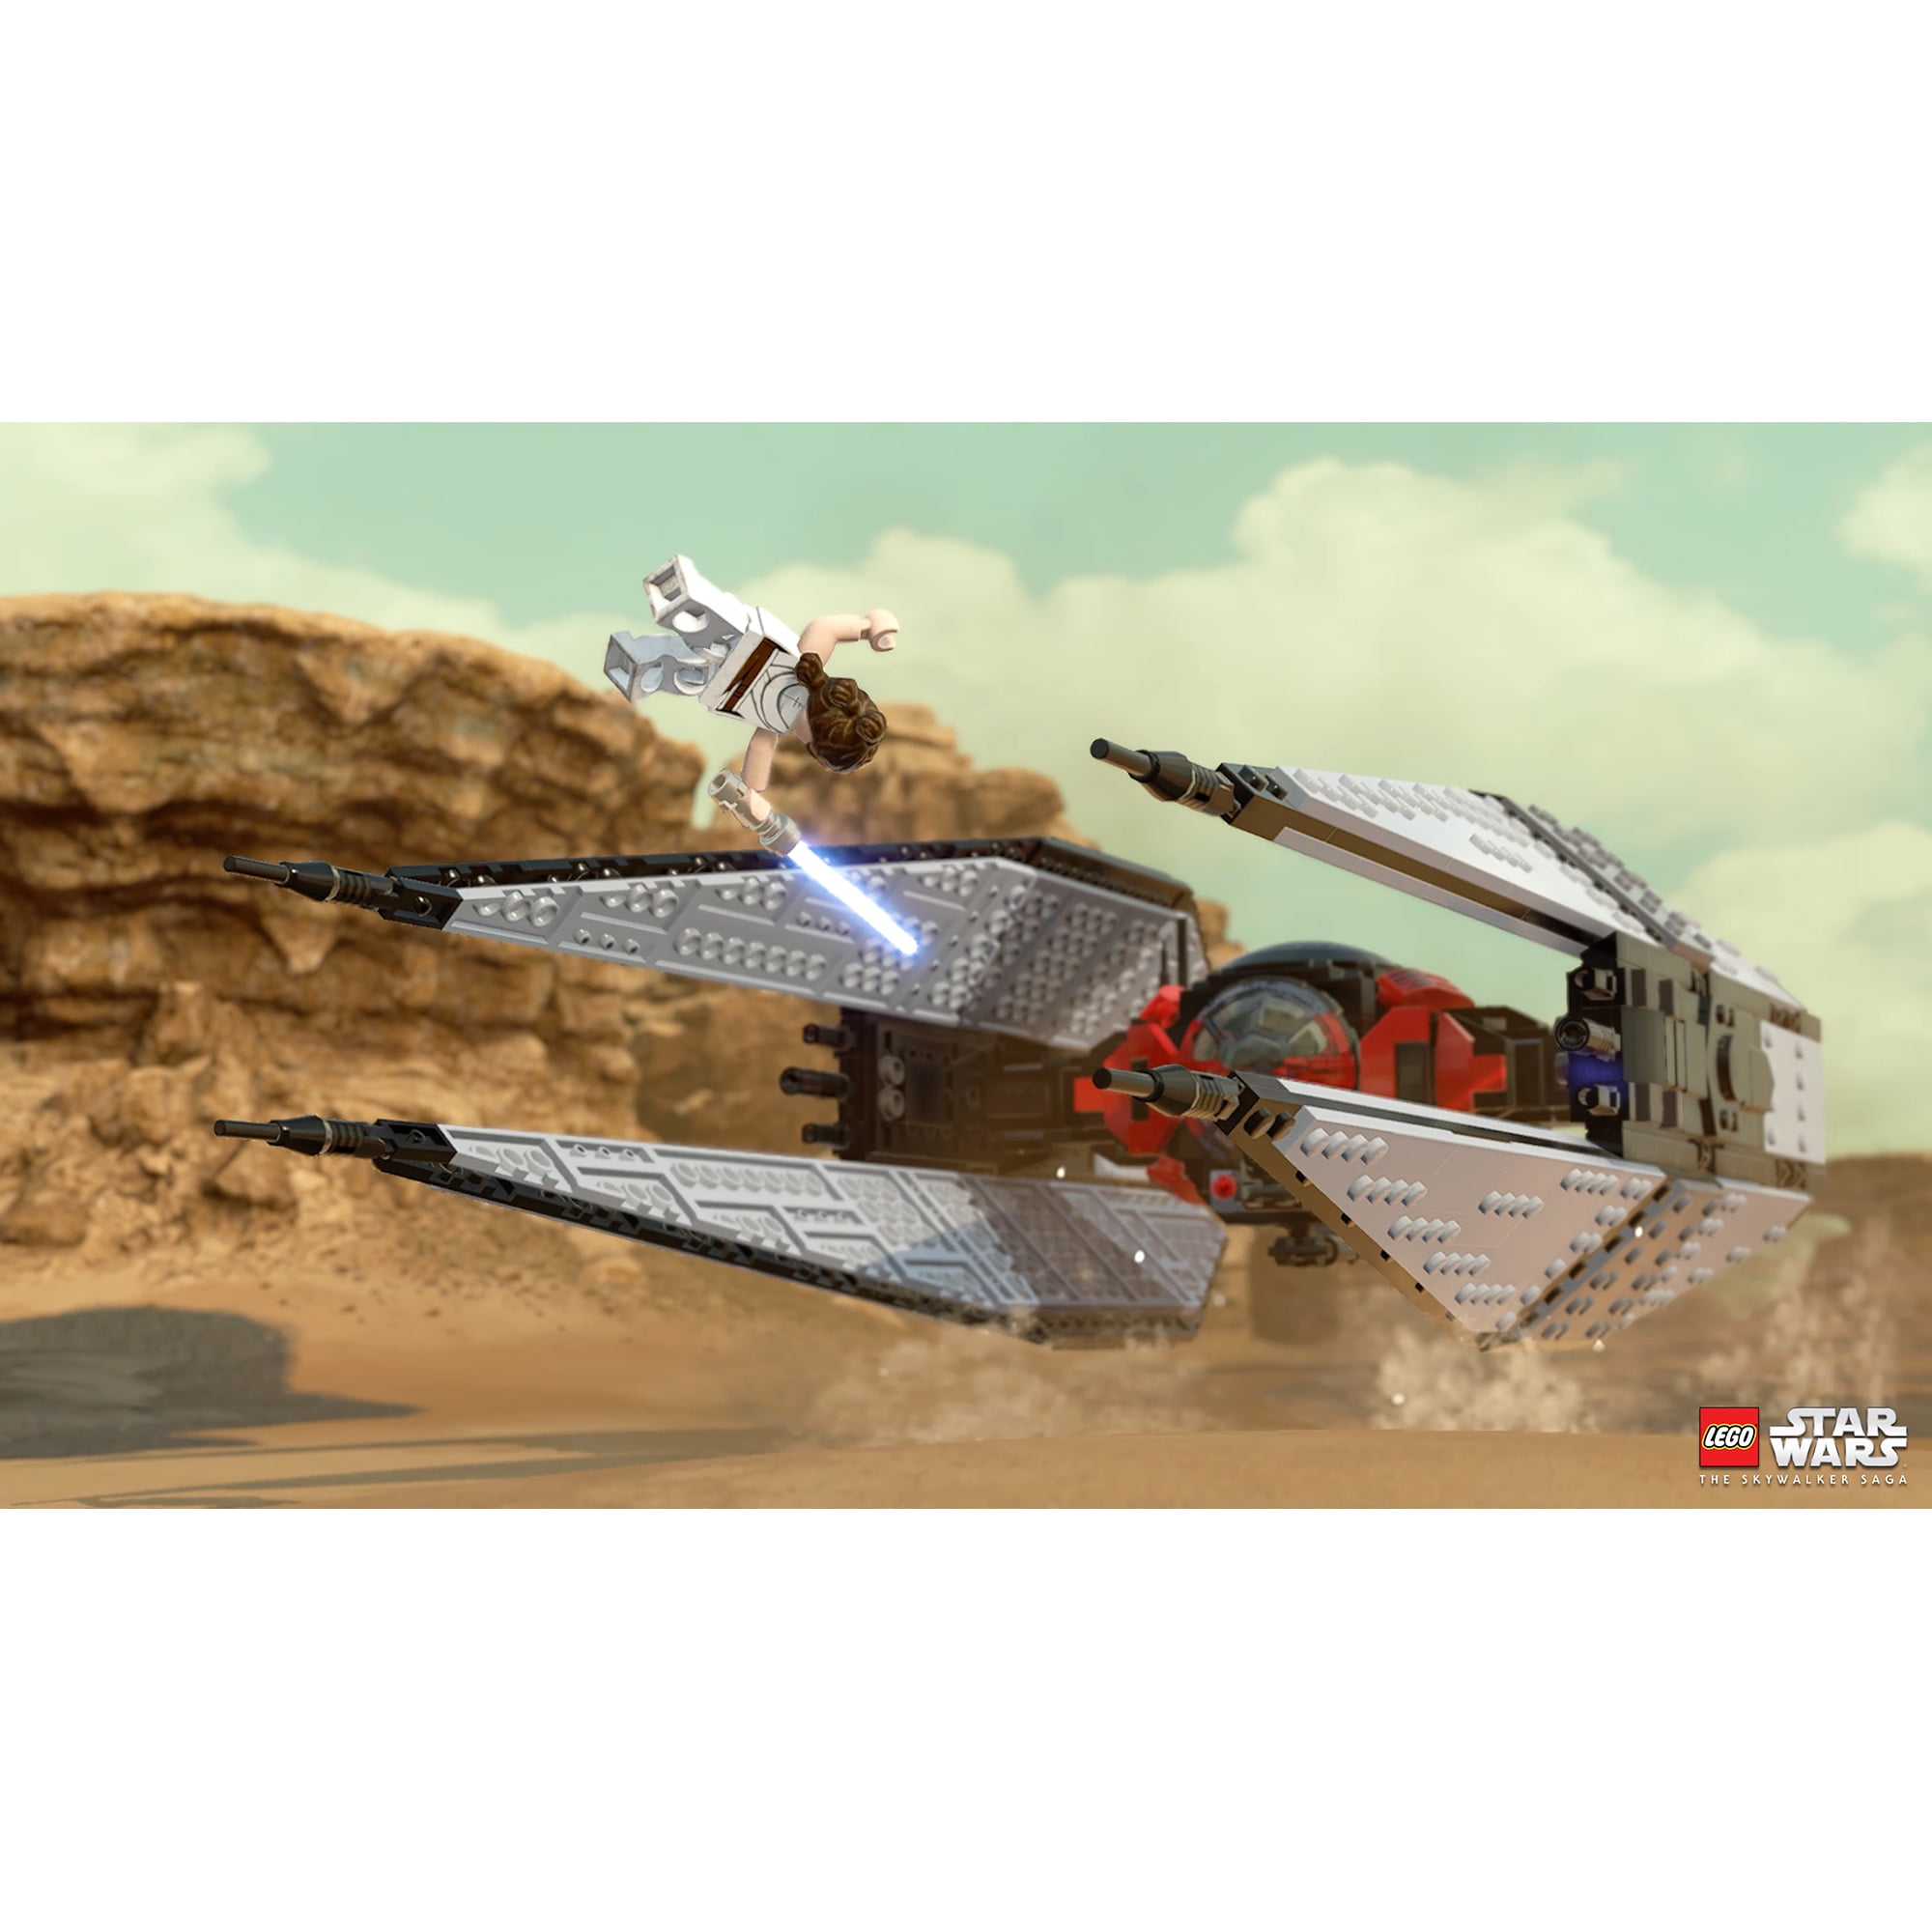 Game - Lego Star Wars - A Saga Skywalker Deluxe Edition BR - Xbox One em  Promoção na Americanas